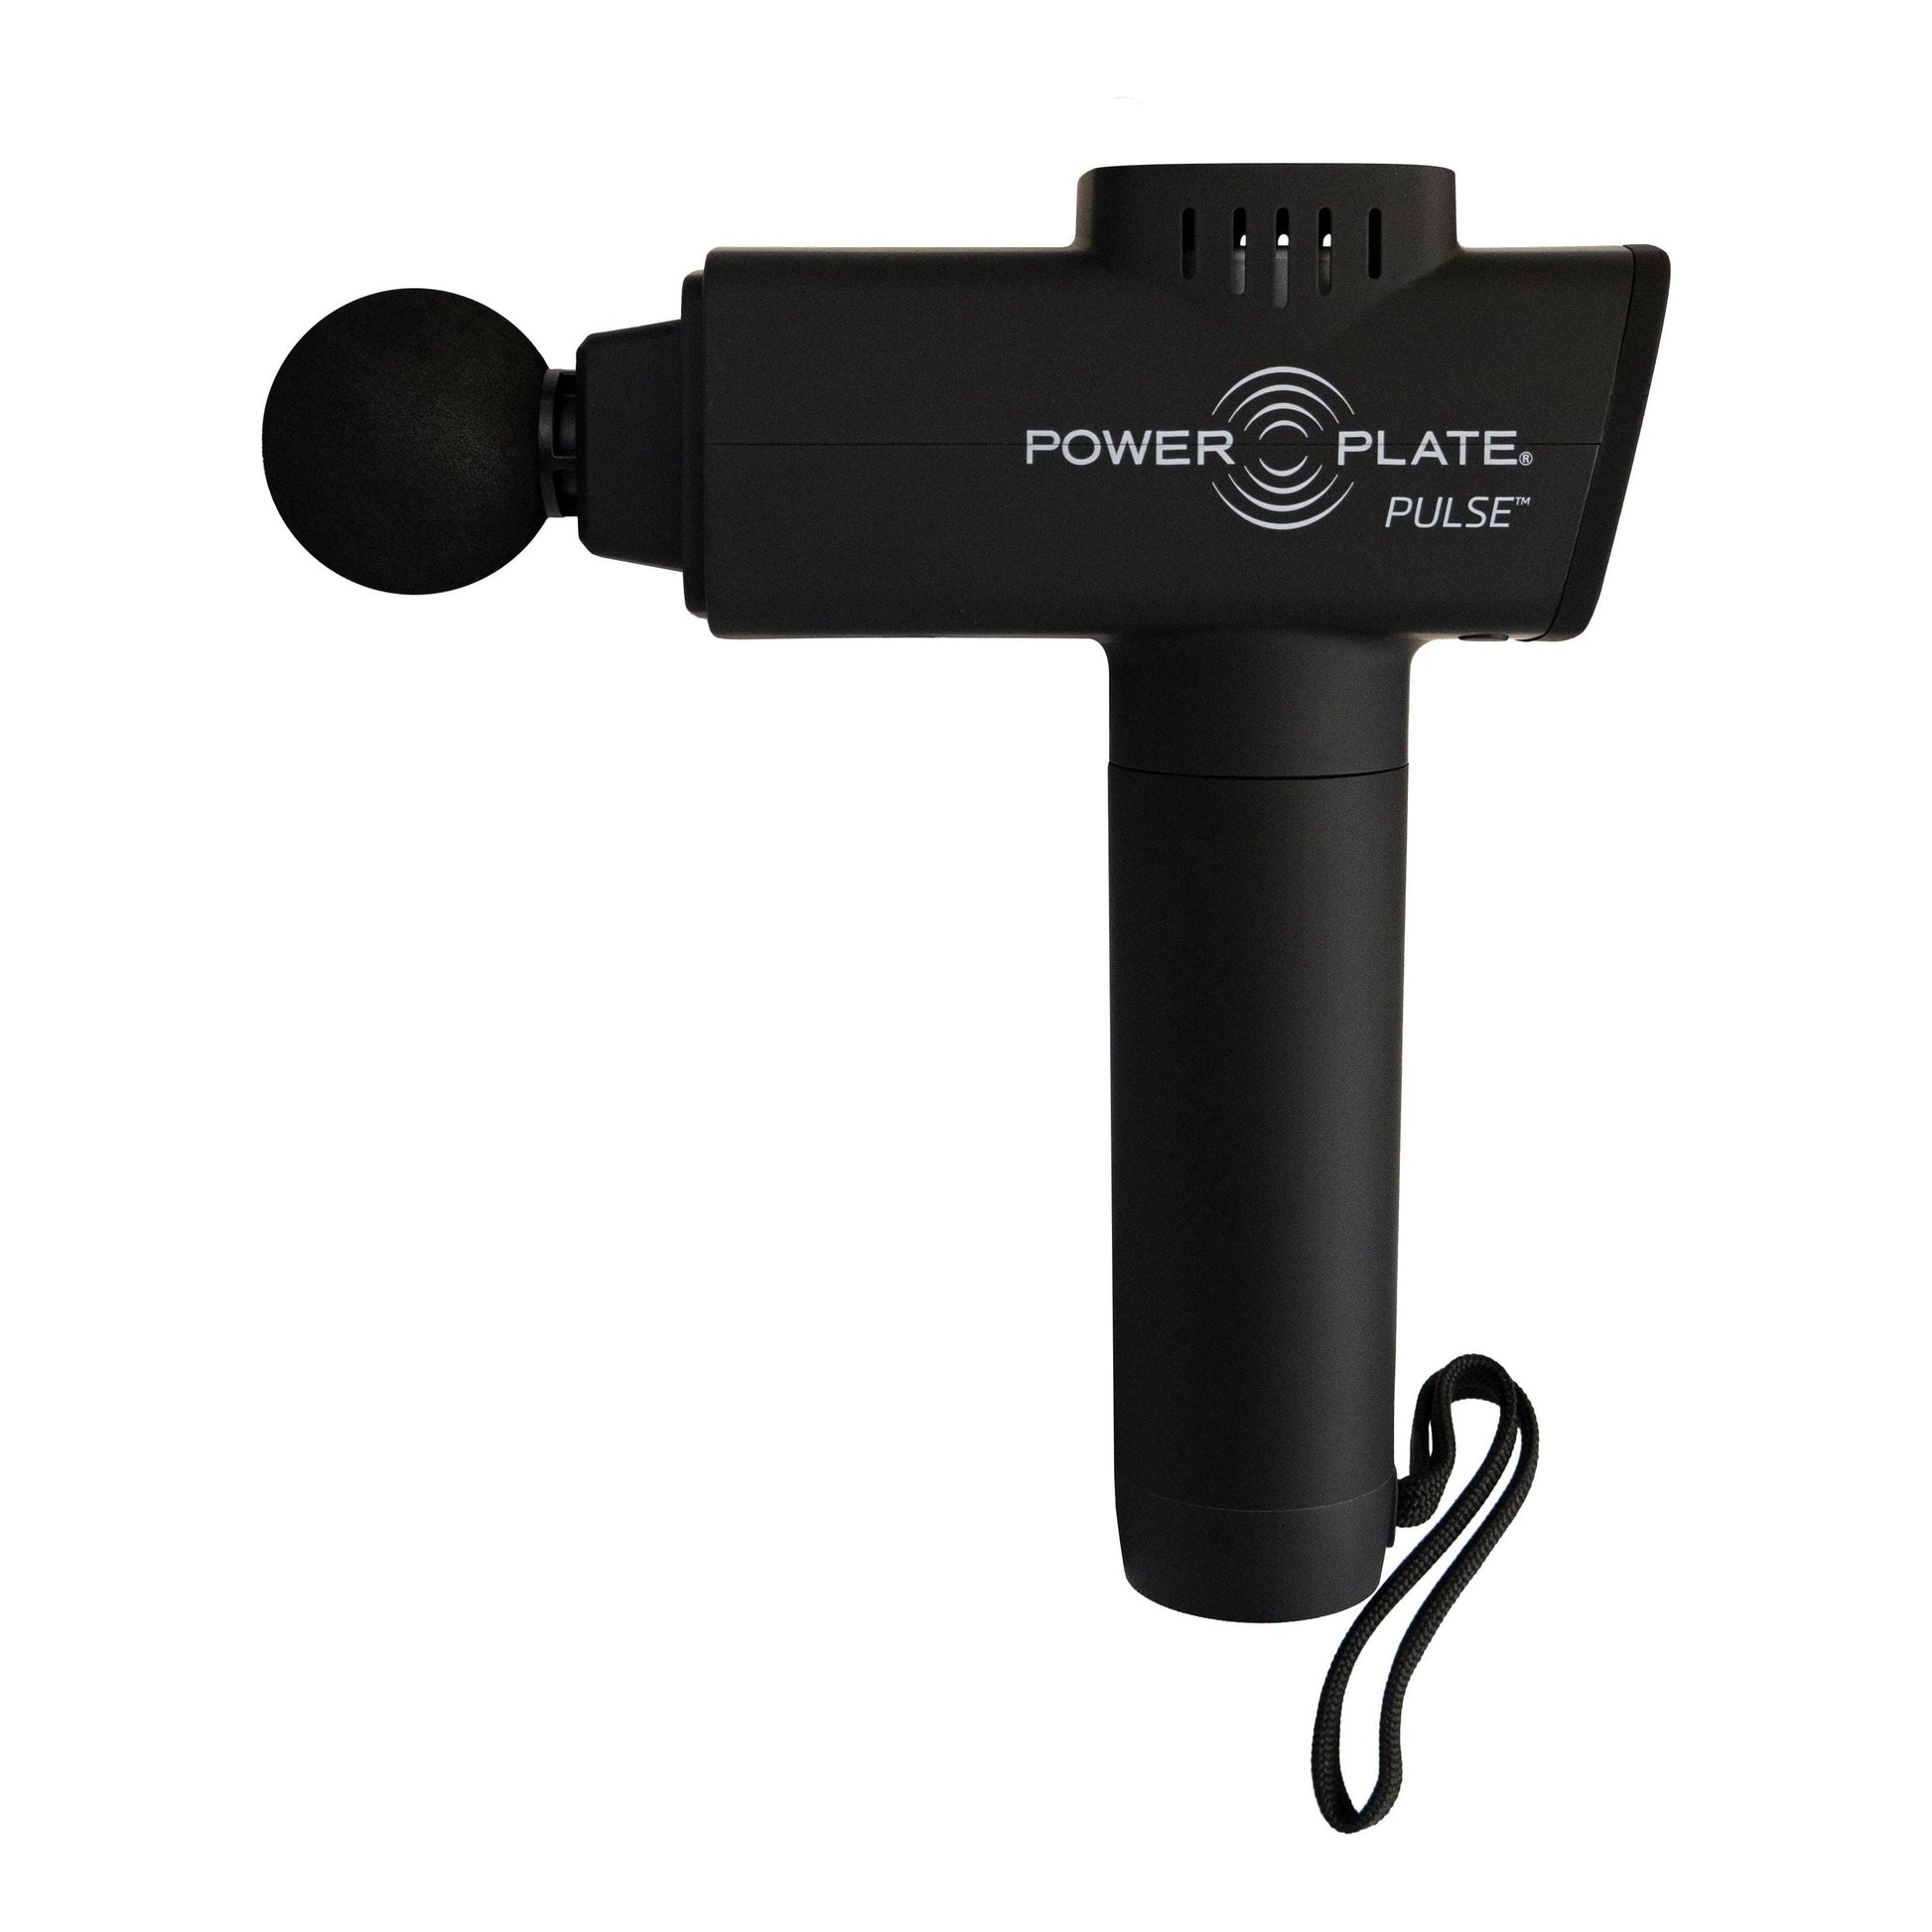 Power Plate Pulse Massage Gun (Black) Additional Options-my7